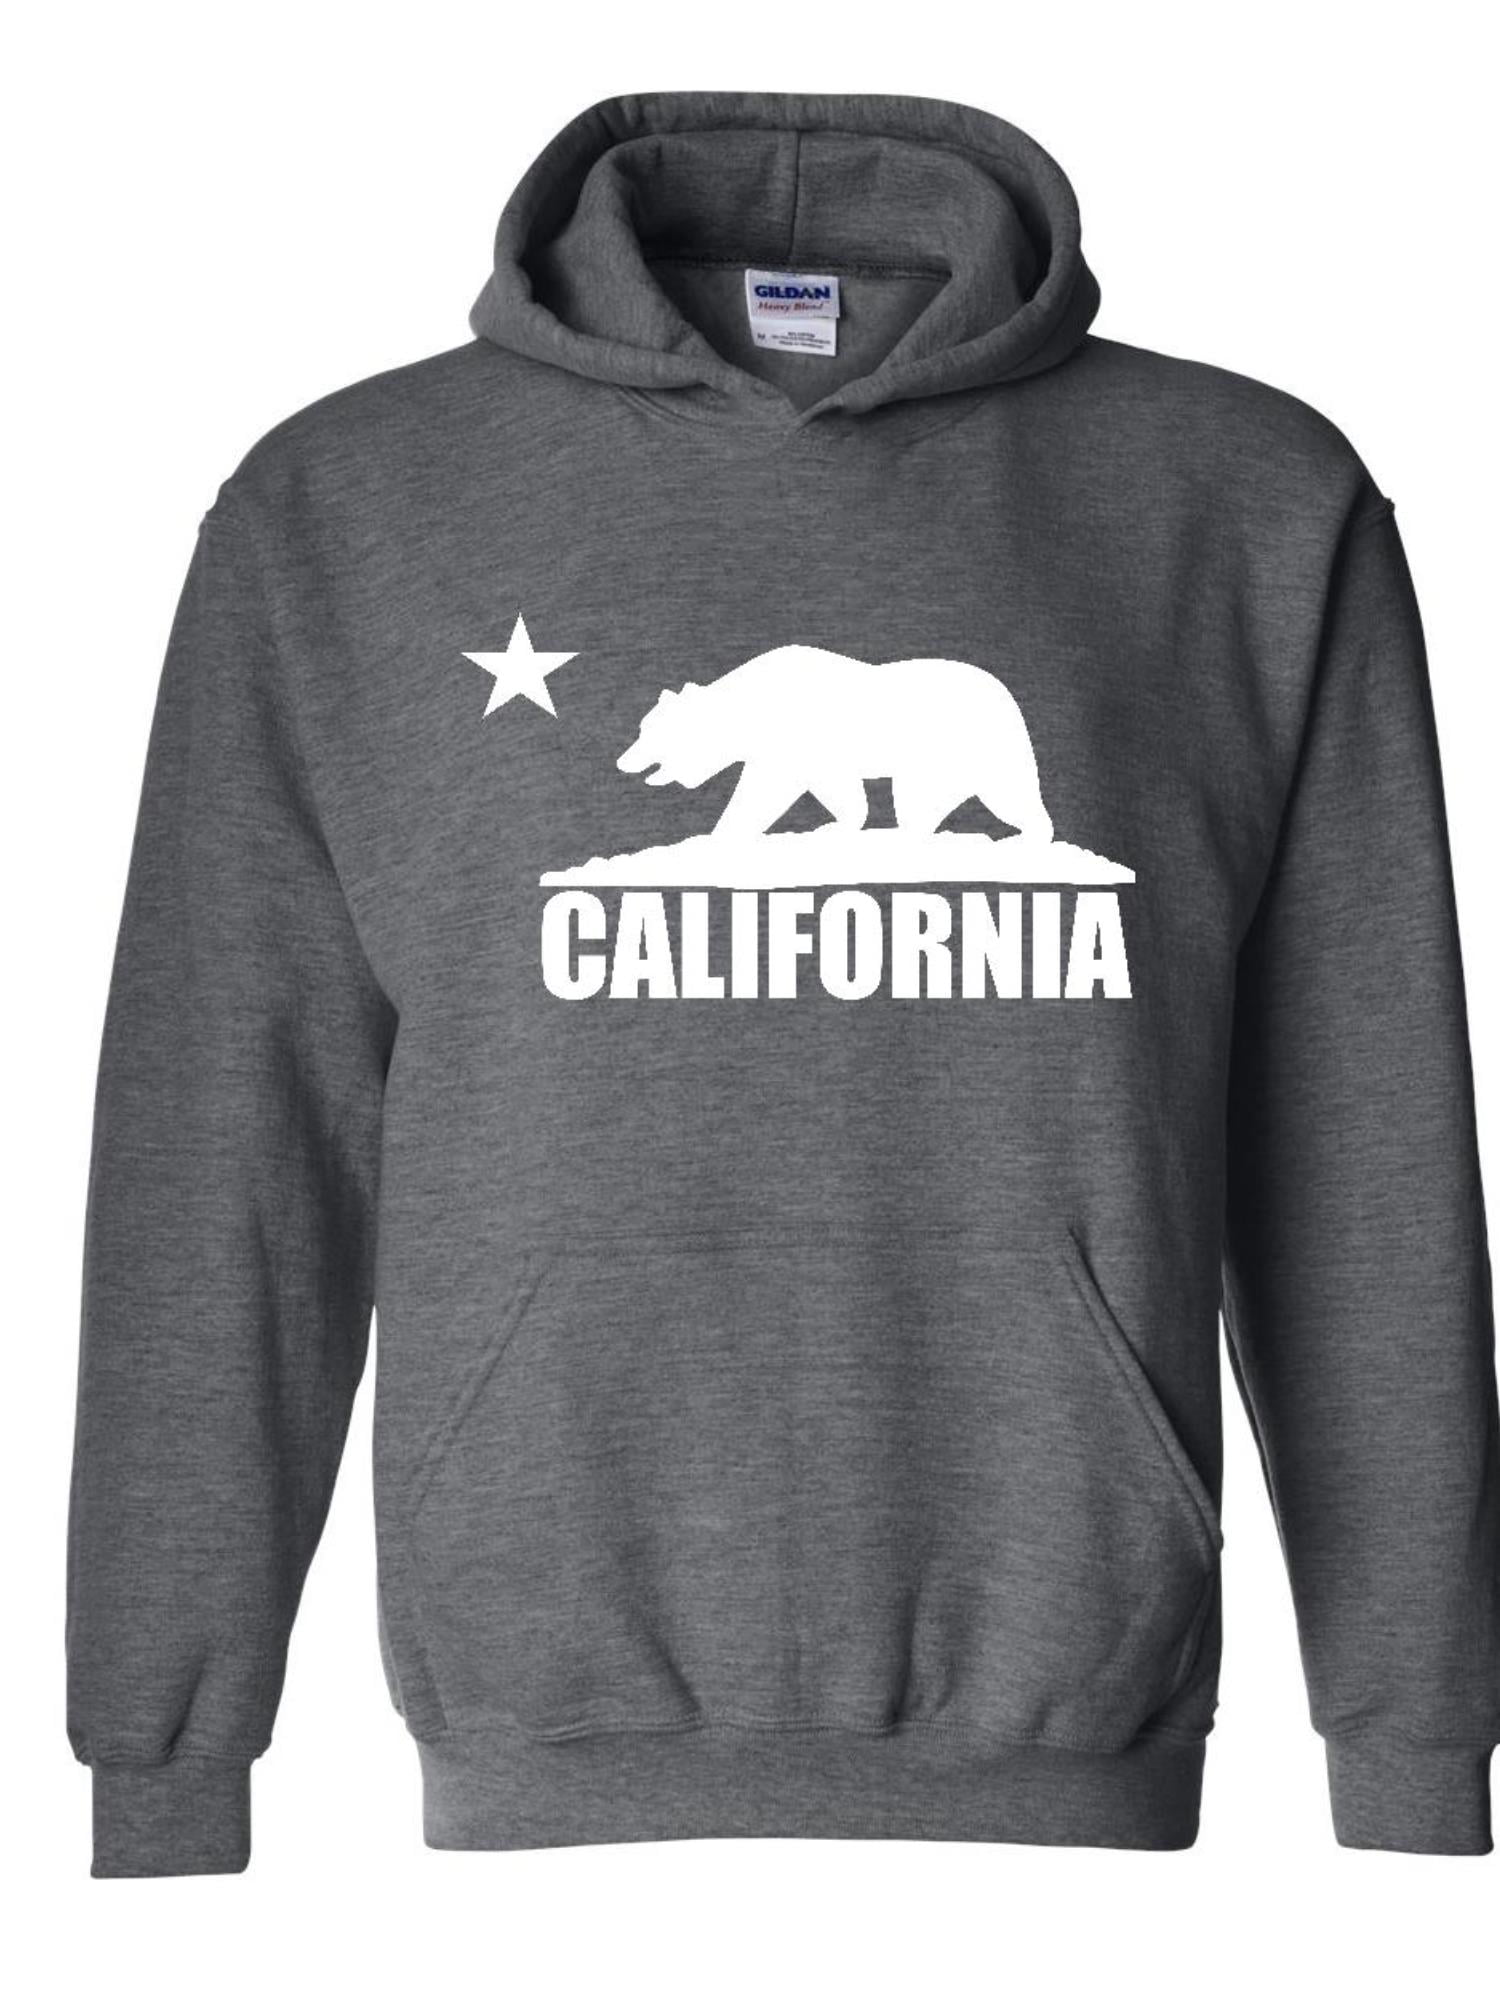 Unisex California Bear Hoodie Sweatshirt - Walmart.com - Walmart.com